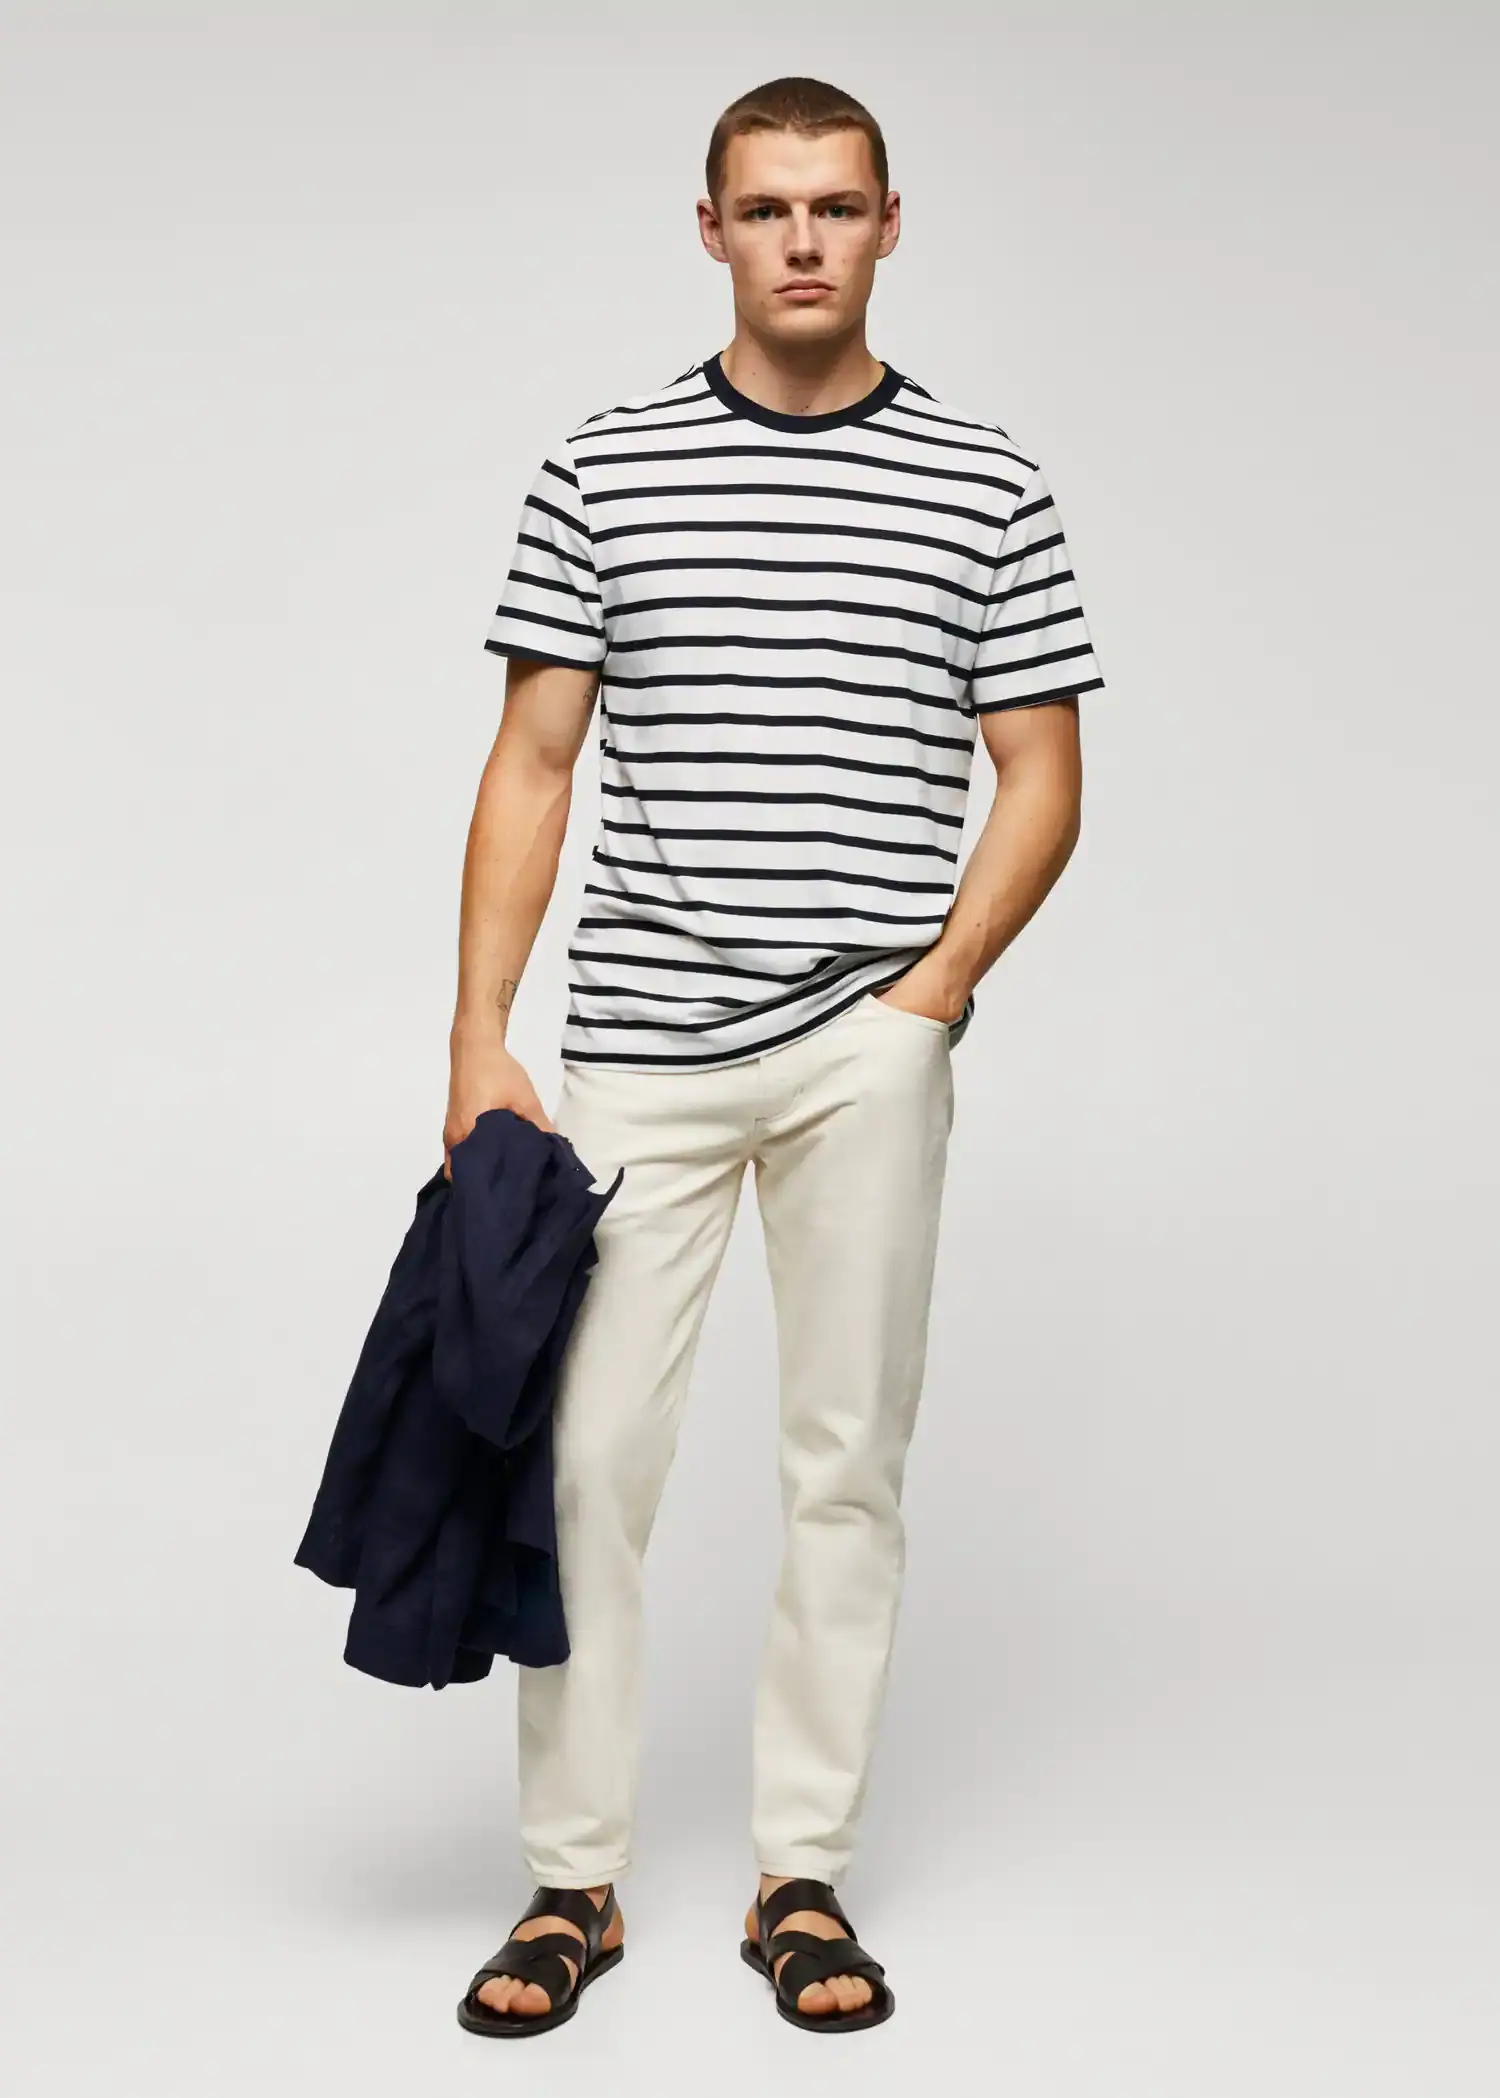 Mango Cotton-modal striped t-shirt. a young man wearing a striped shirt and white pants. 